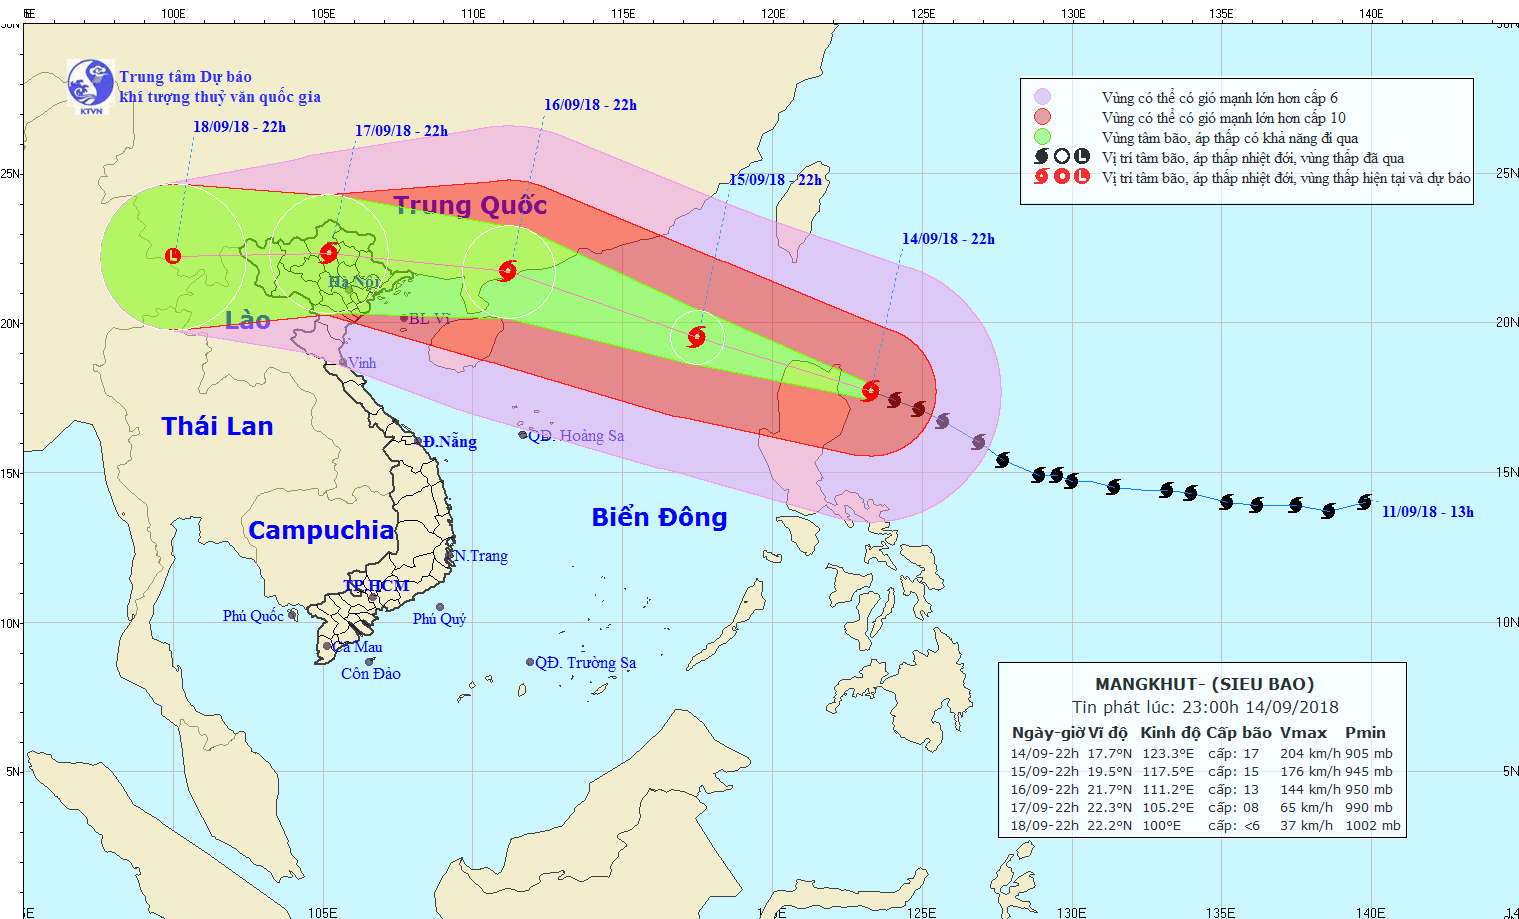 siêu bão Mangkhut